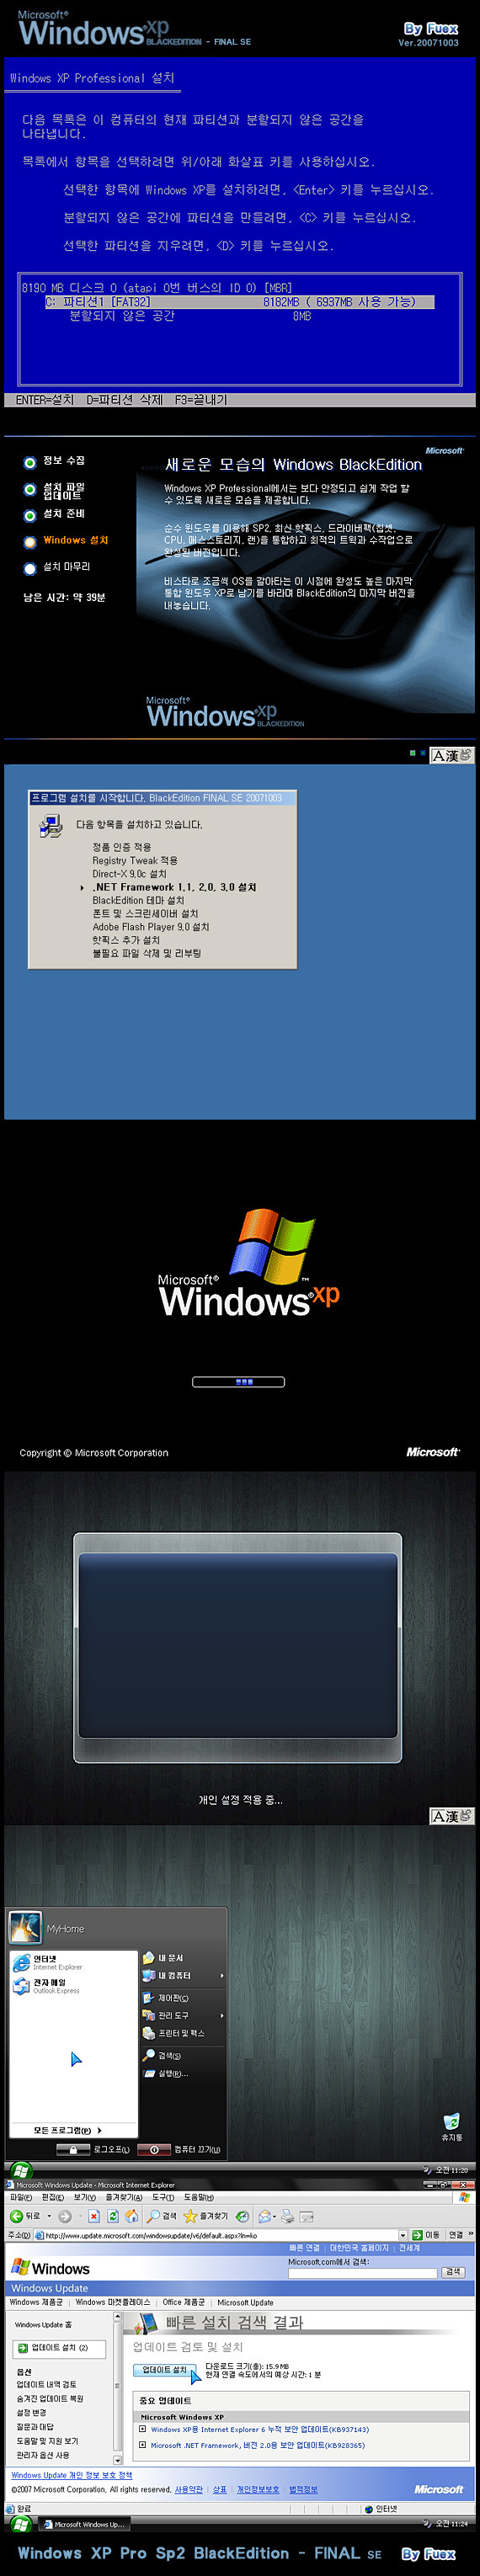 Windows xp sp2, xp 블랙 에디션, 블랙 에디션, 블랙에디션, 서비스팩2, 윈도우 블랙에디션, 윈도우즈 XP, 윈도우즈 블랙에디션, 윈도우즈 블렉 에디션, 윈도우즈XP, 윈도우즈XP 블랙에디션, Windows XP Professional SP2 Black Edition, Windows XP, IT, computer,